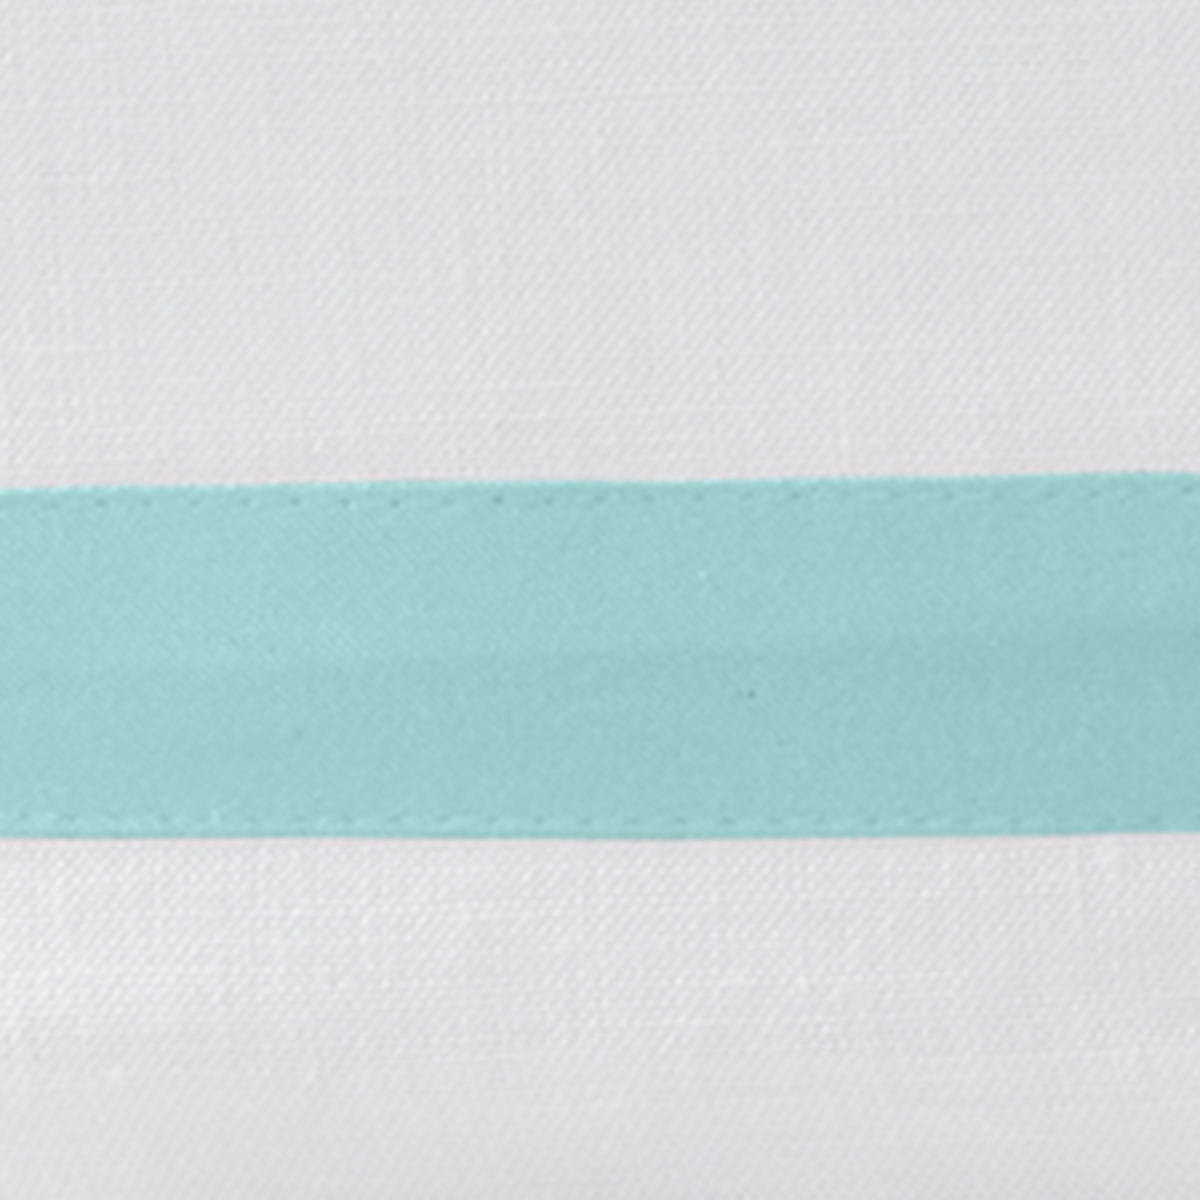 Swatch Sample of Matouk Lowell Tissue Box Cover in Color Aquamarine